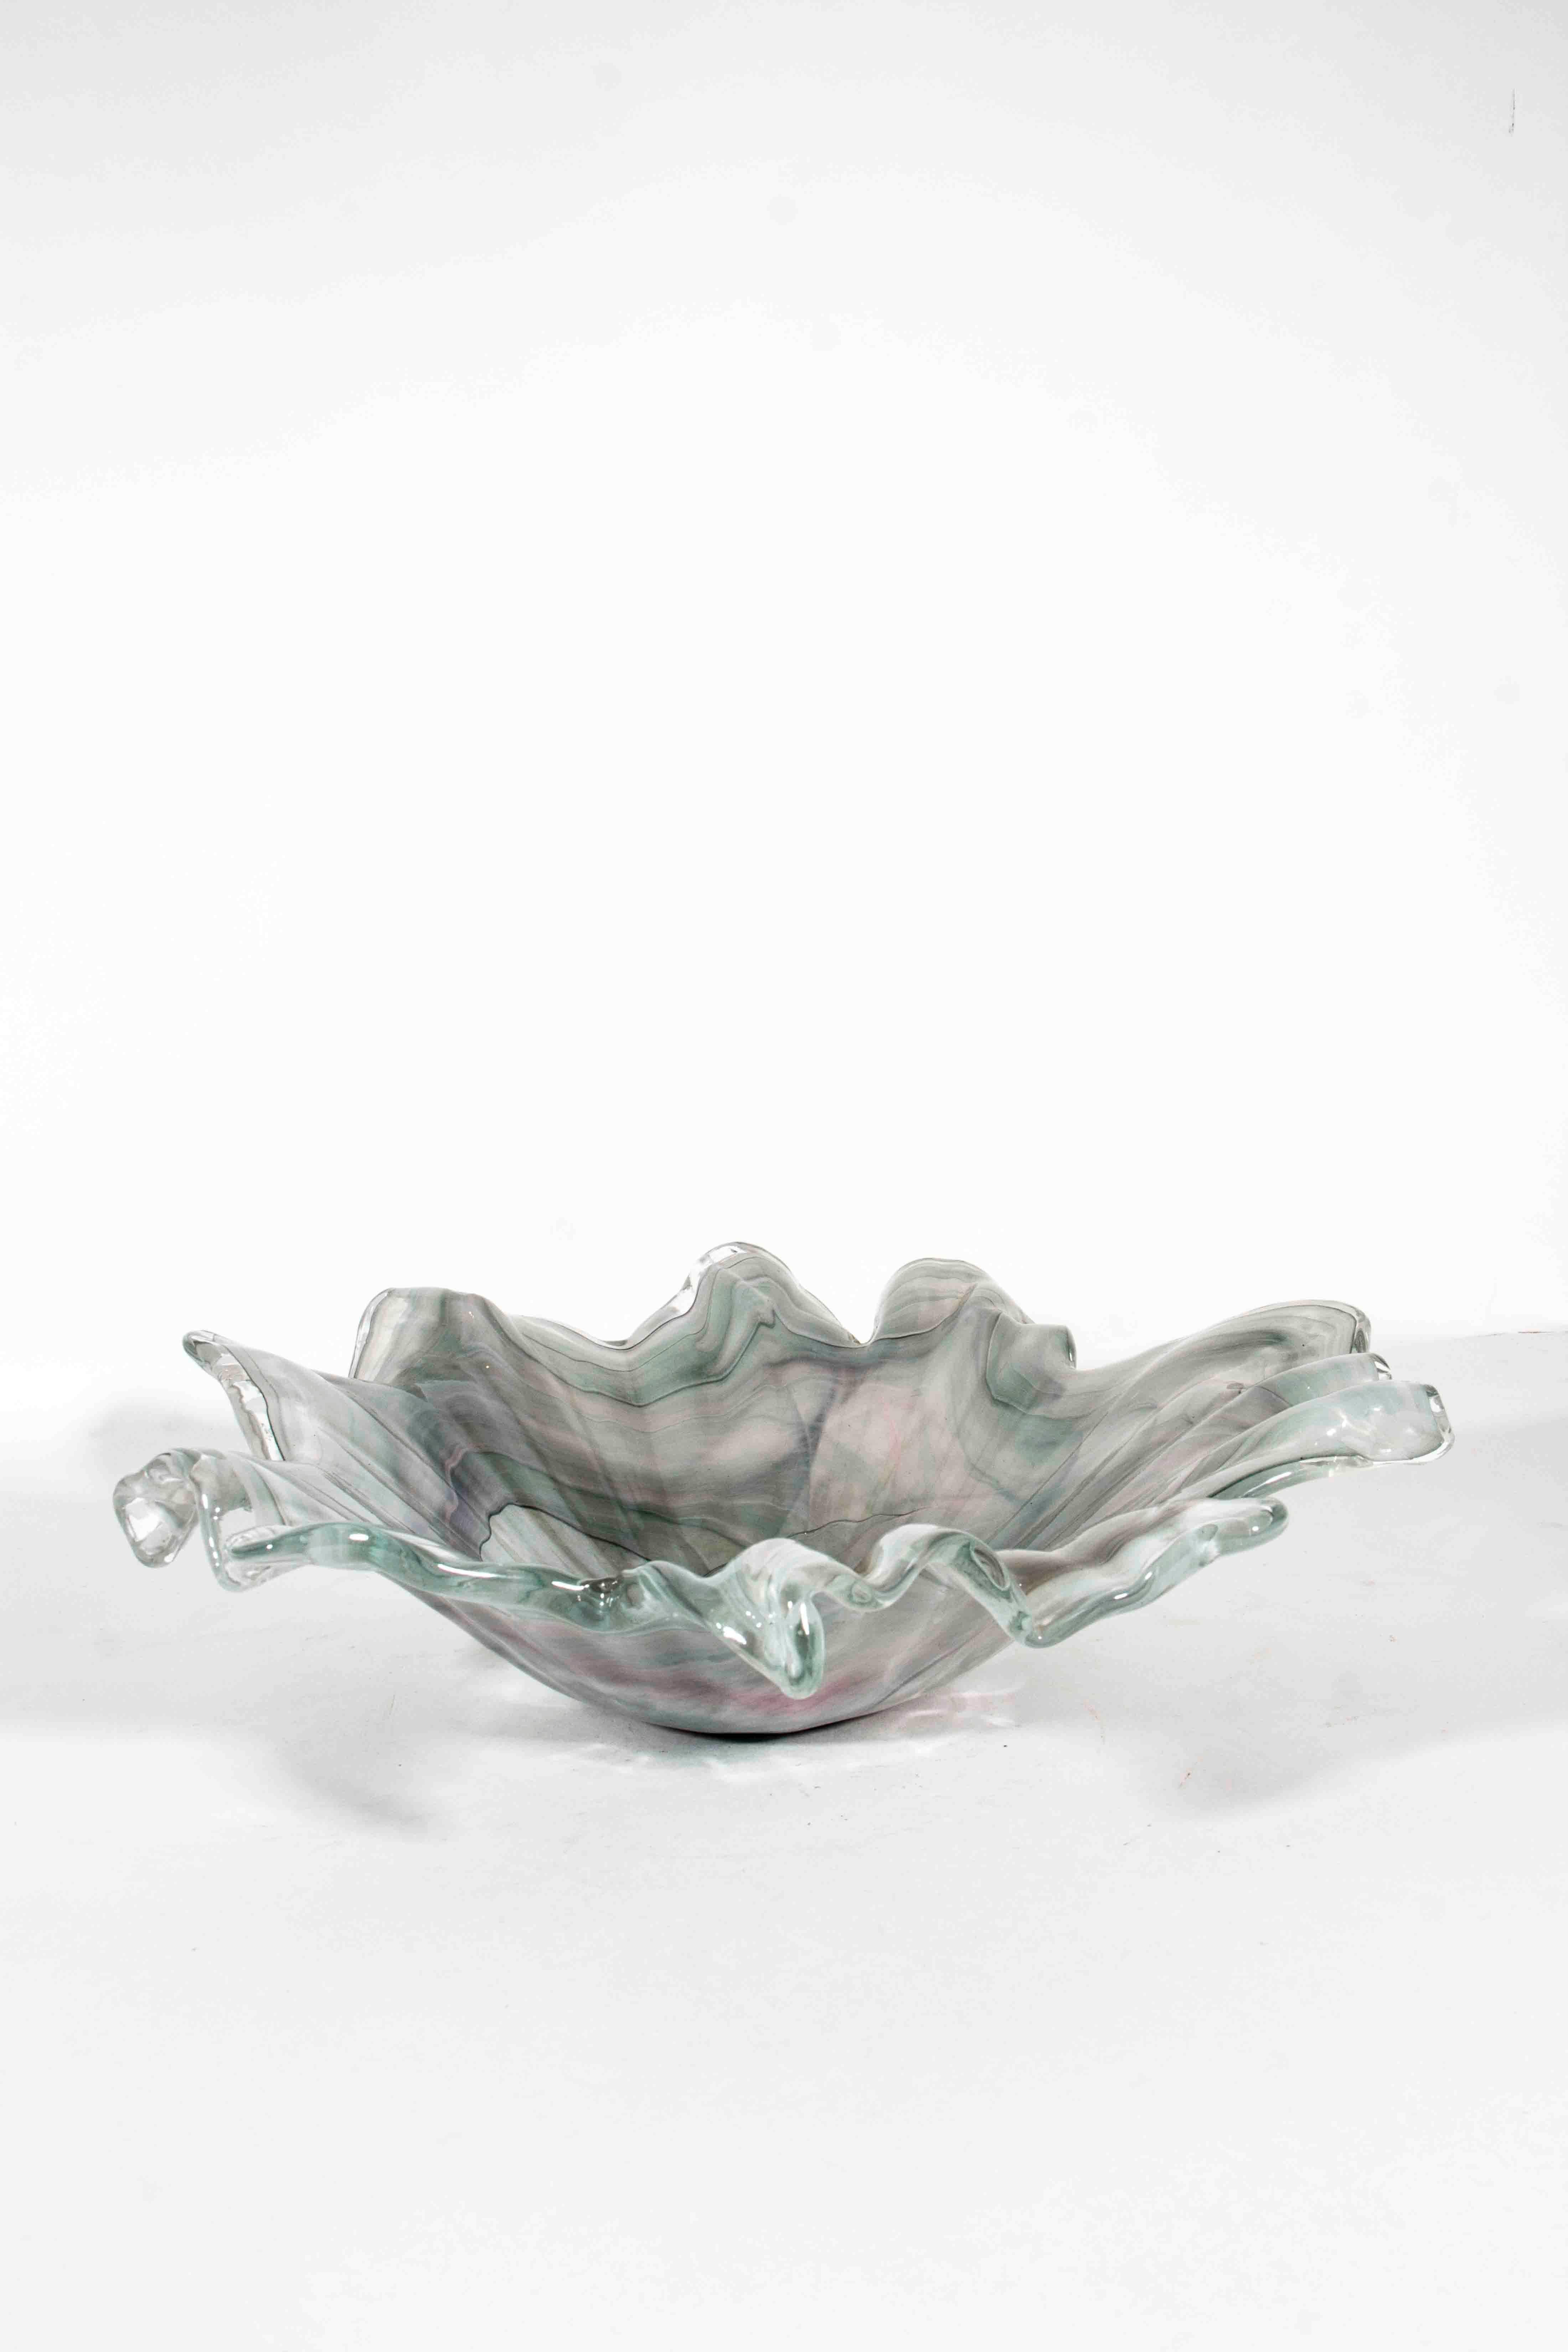 Vintage Murano handblown glass bowl/centerpiece in excellent condition. Measures 4